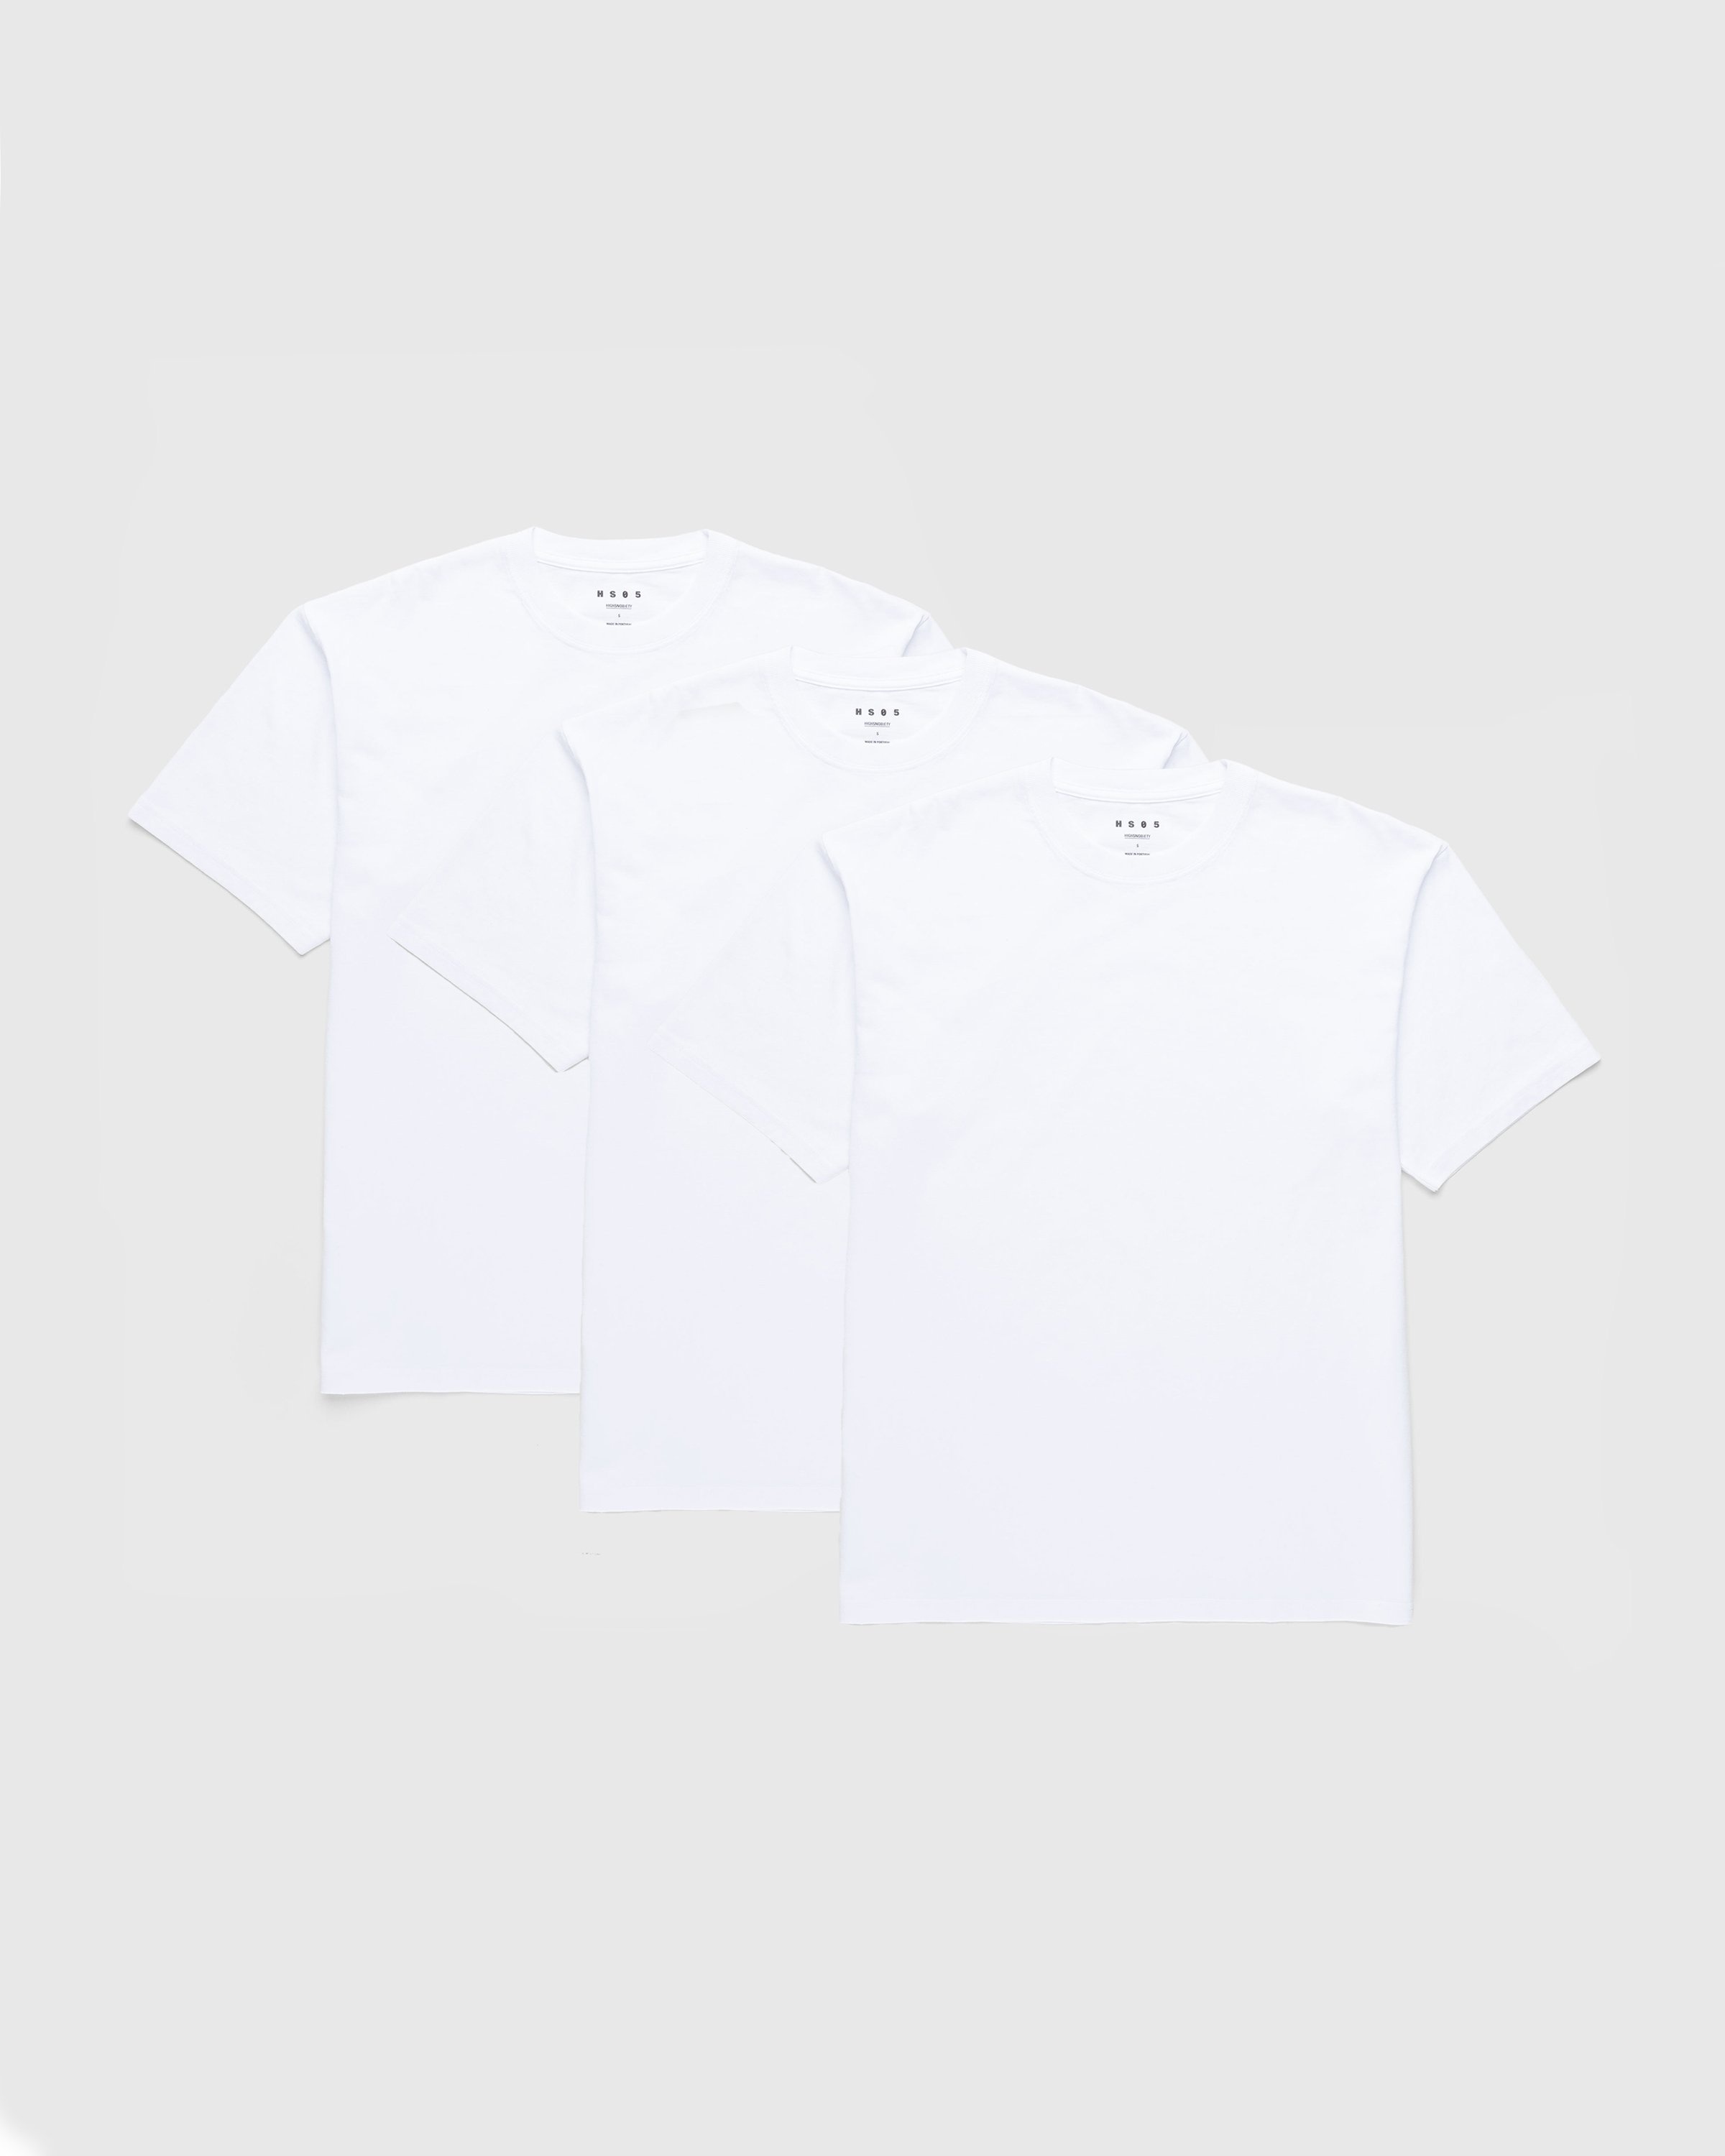 Highsnobiety HS05 – 3 Pack T-Shirts White - T-shirts - White - Image 1